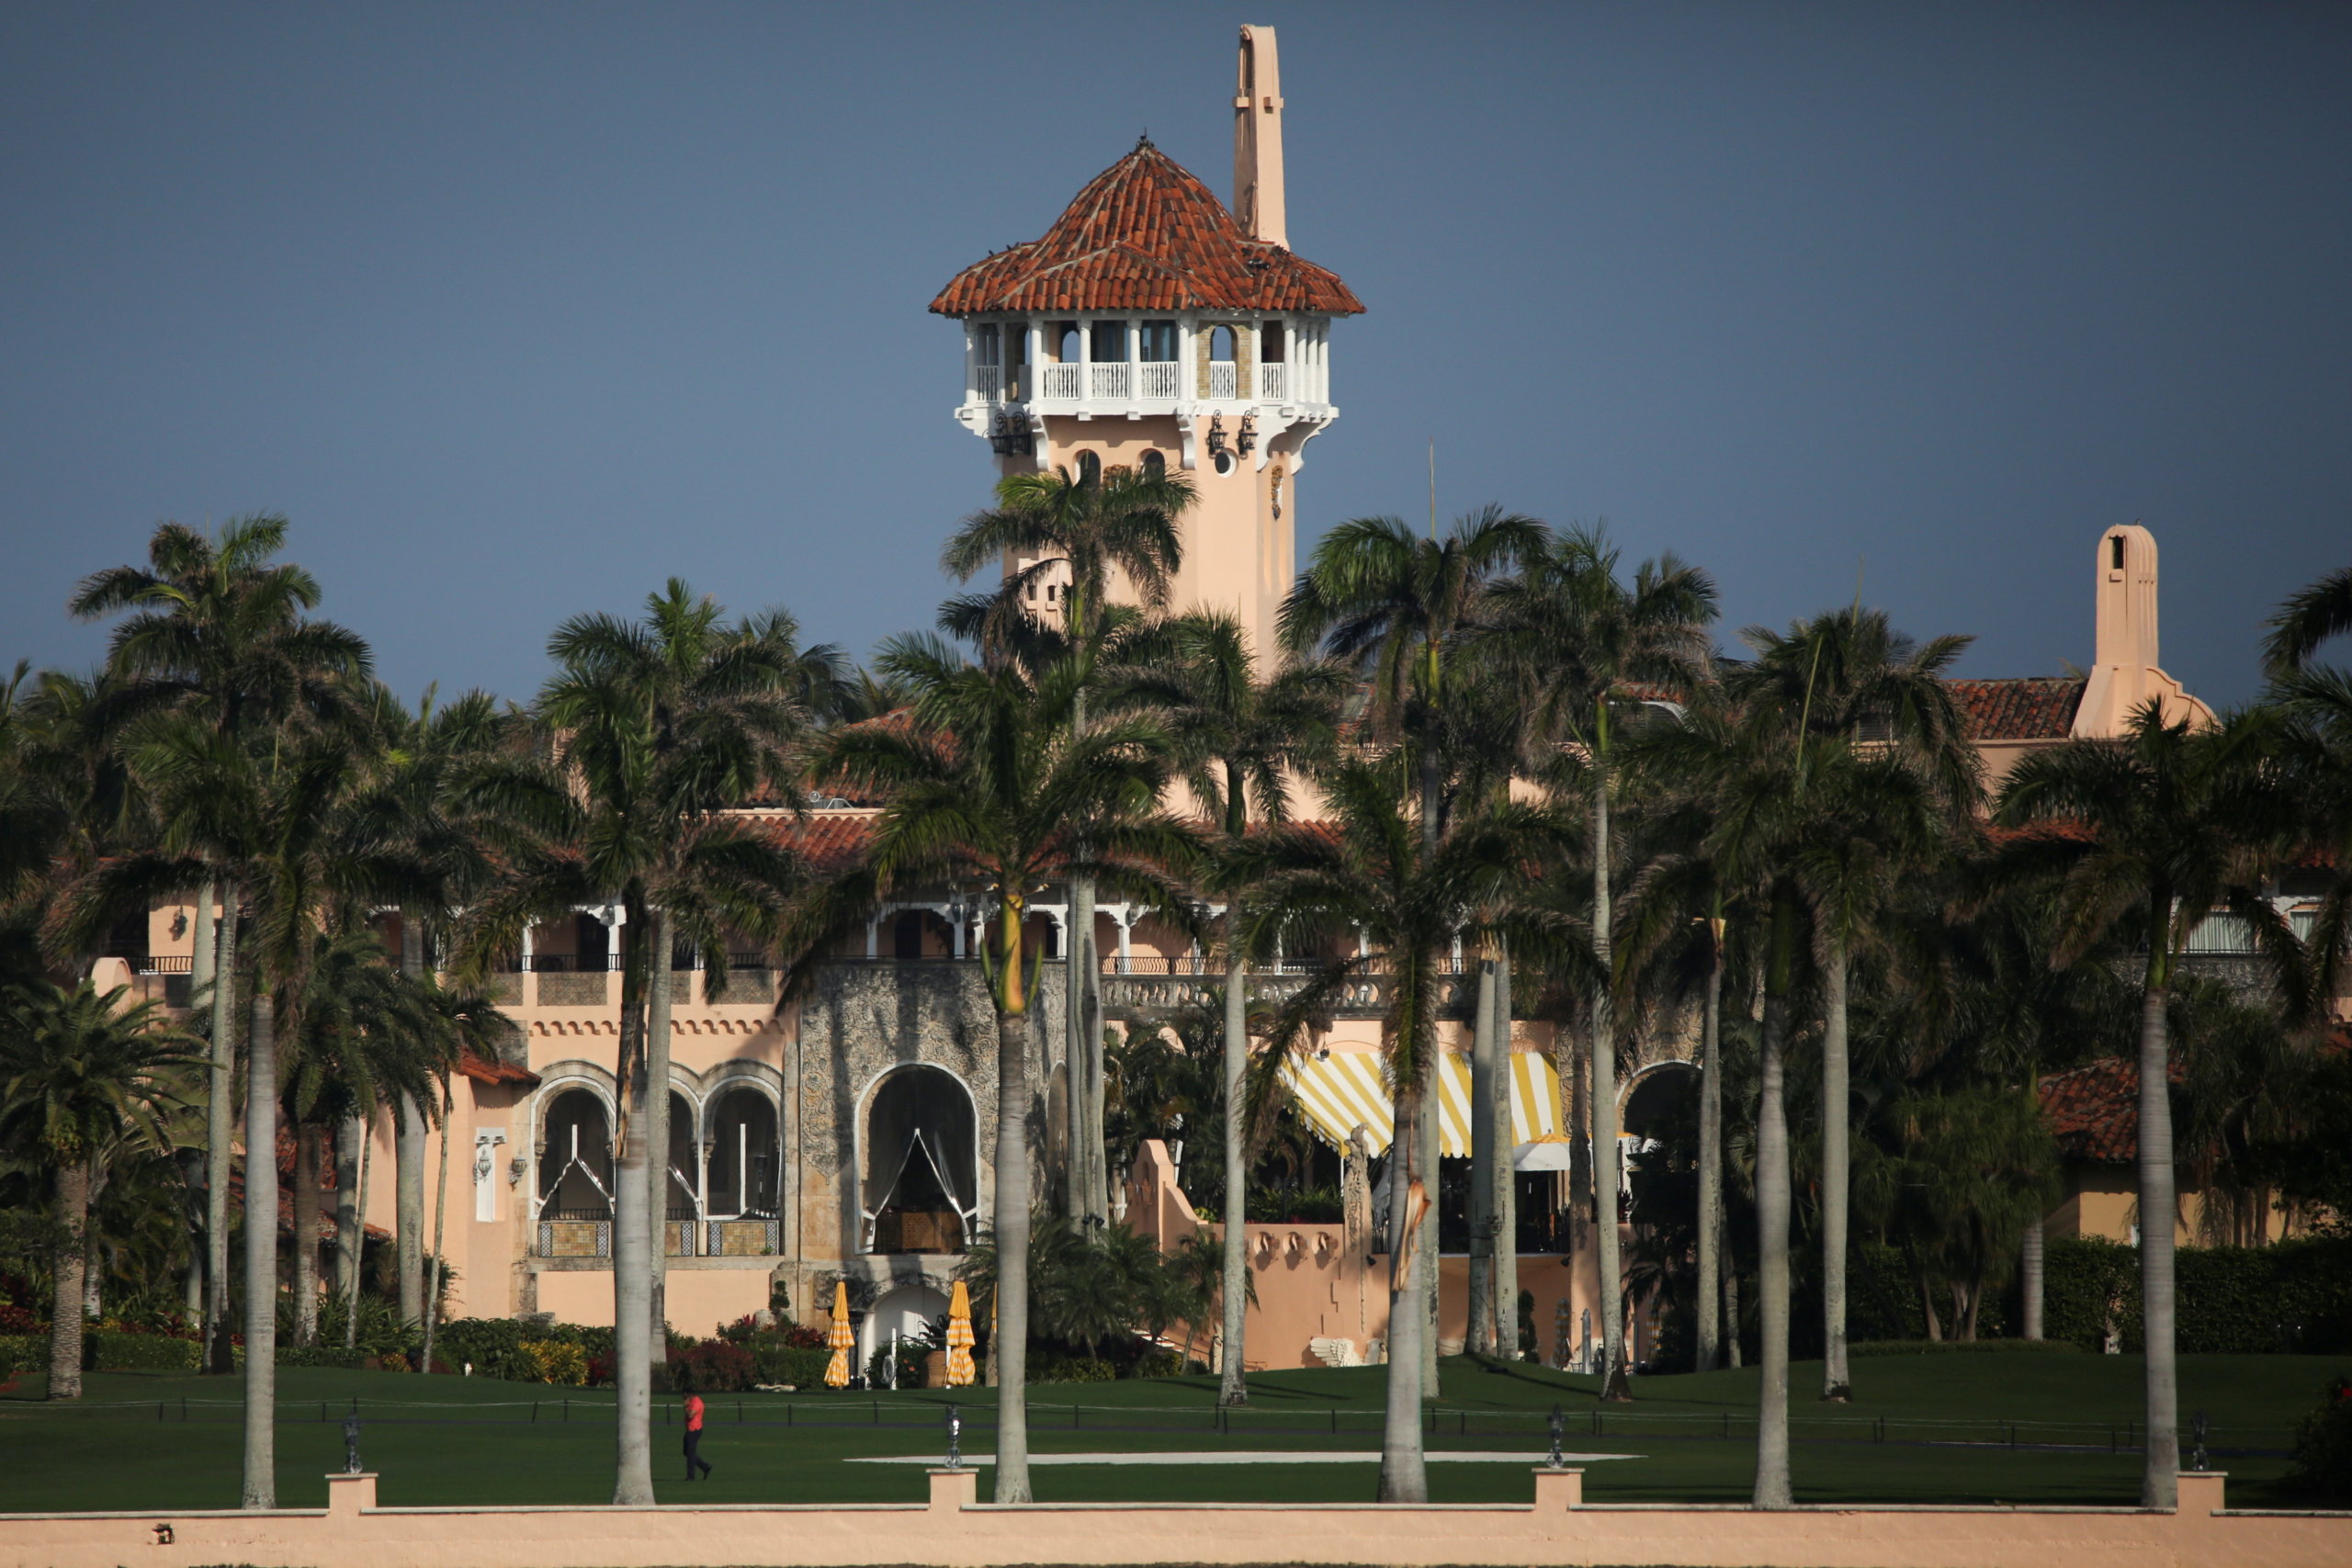 Palm Beach real estate broker Moens testifies about Mar-a-Lago's value